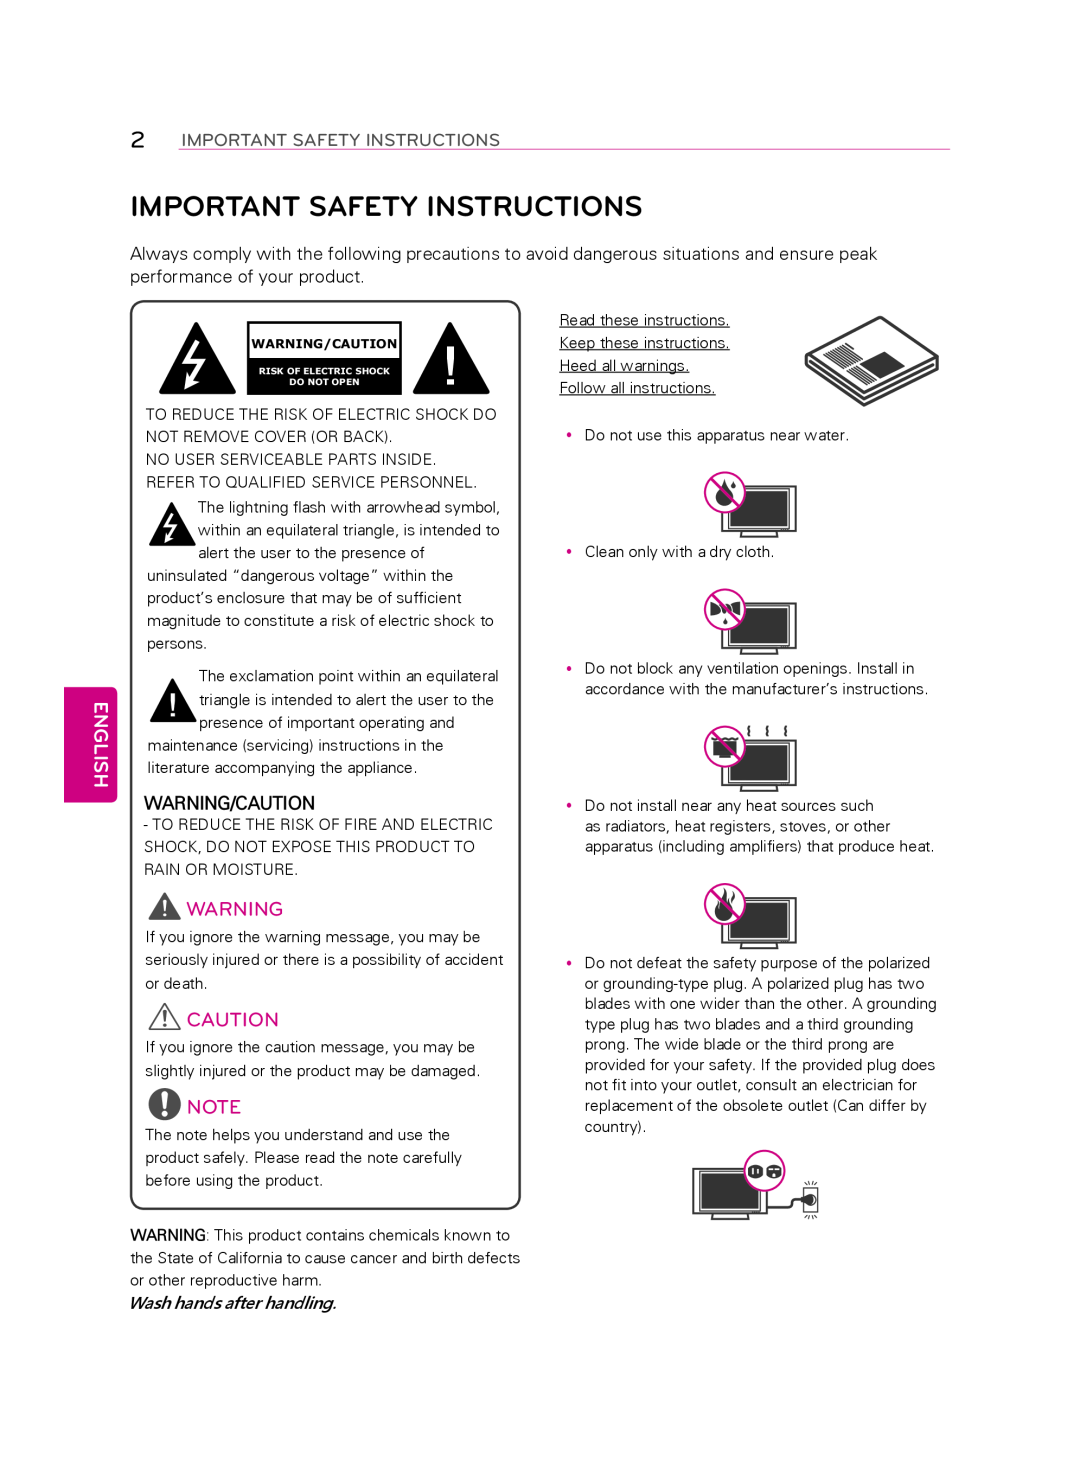 LG Electronics 55LA9650 owner manual Important Safety Instructions, English, Wash hands after handling 